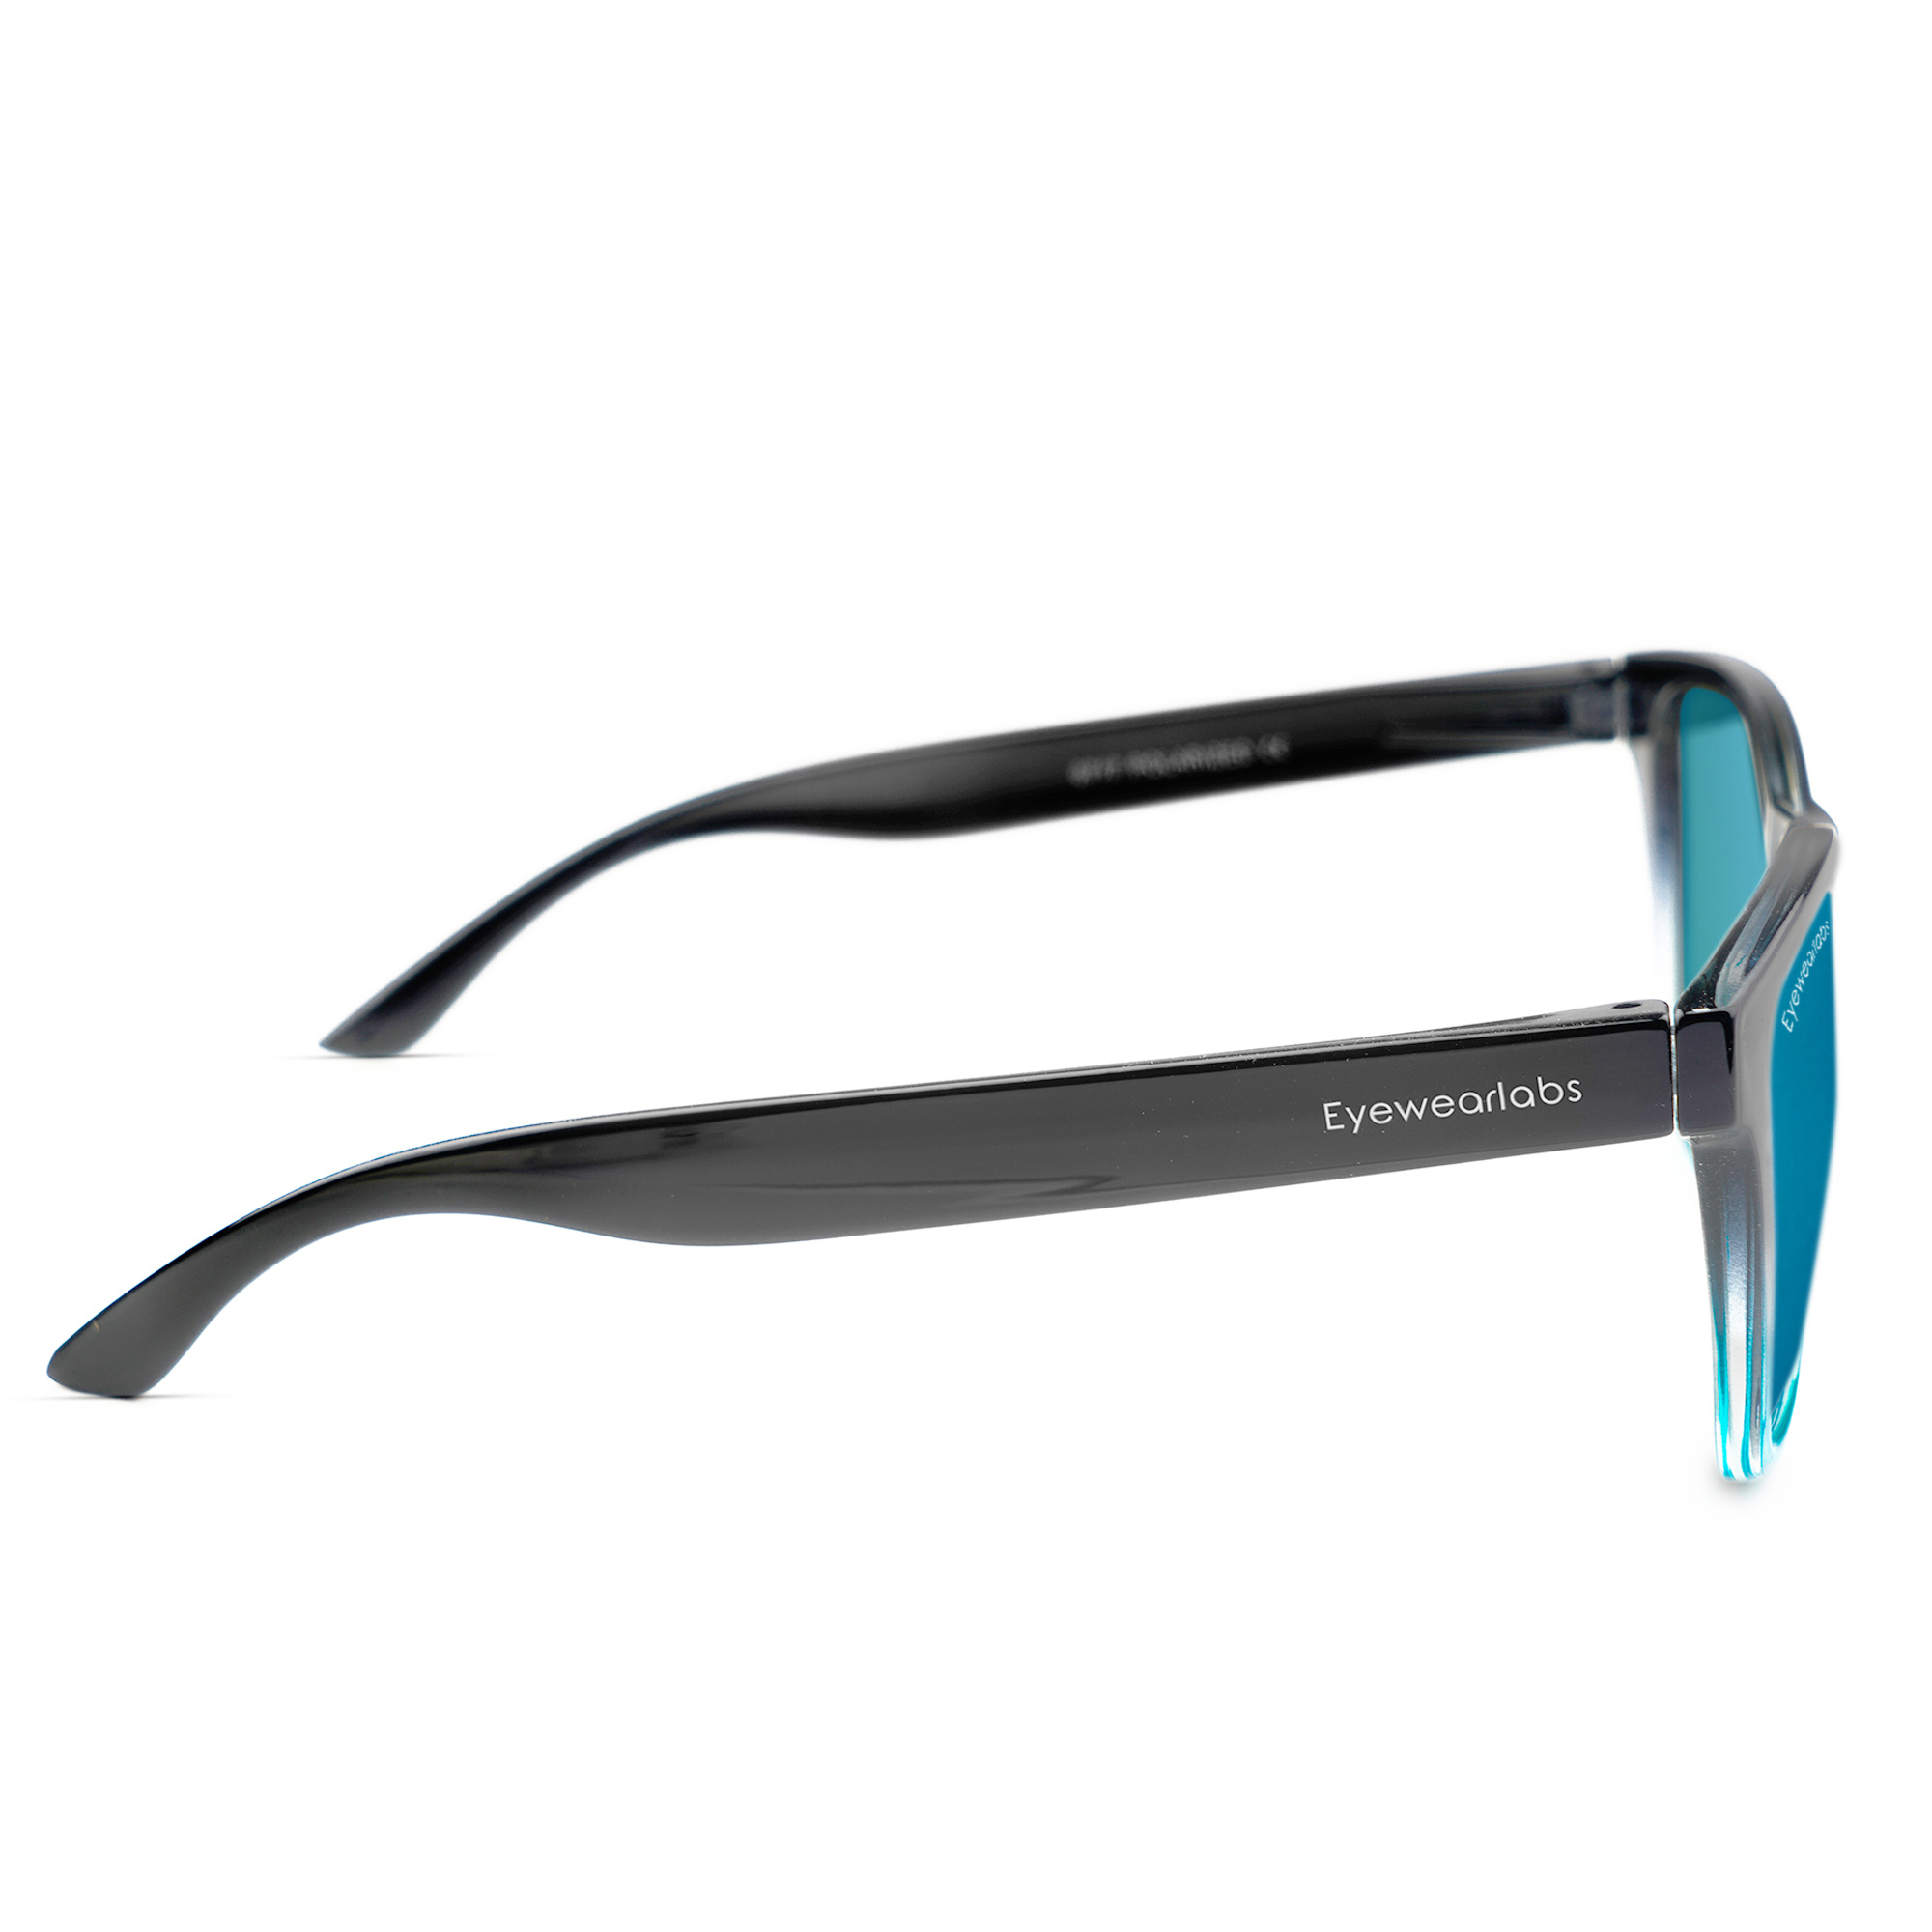 Durand Blue X MN Men Sunglasses - Eyewearlabs